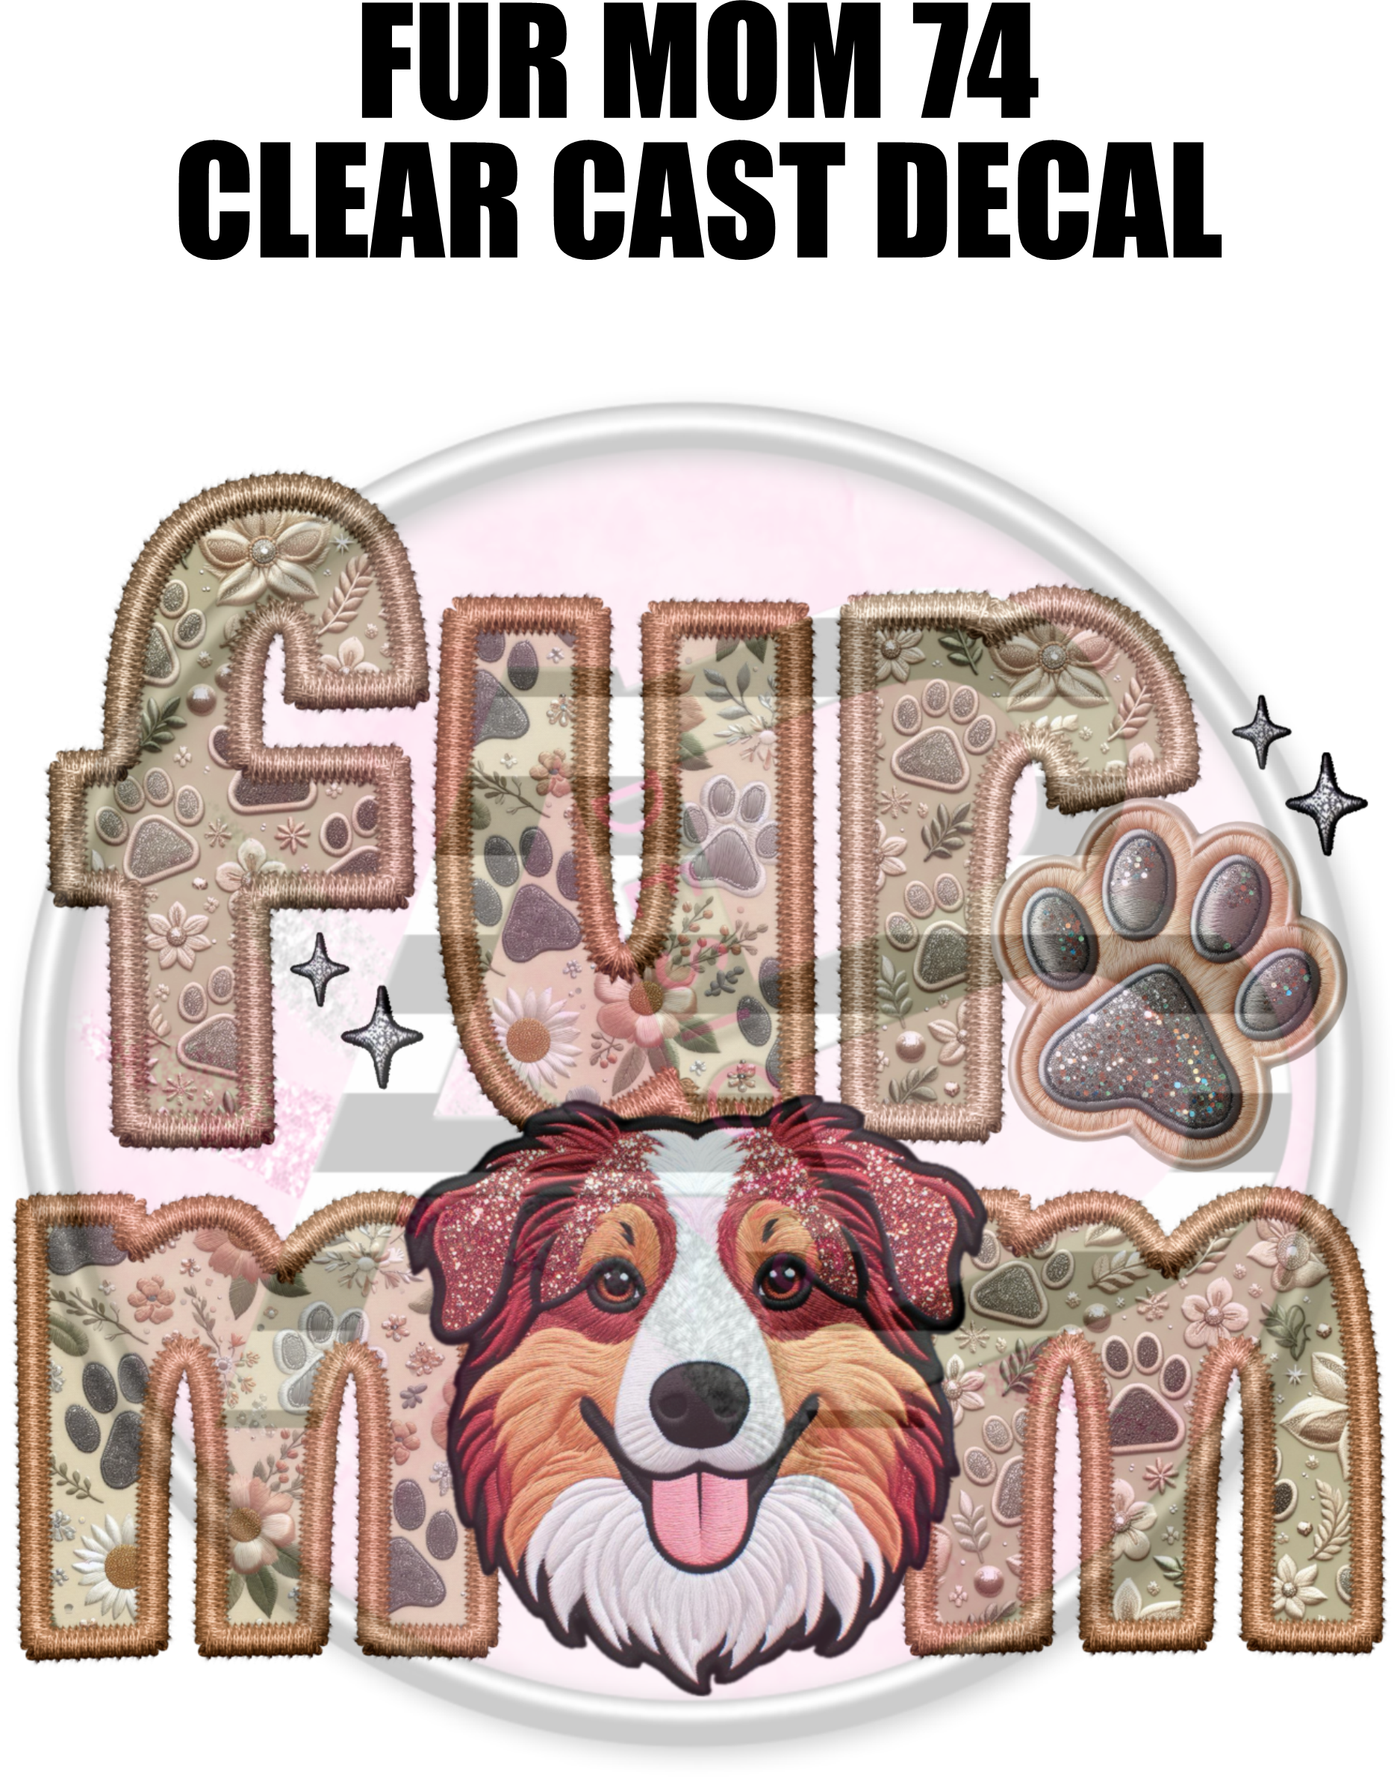 Fur Mom 74 - Clear Cast Decal